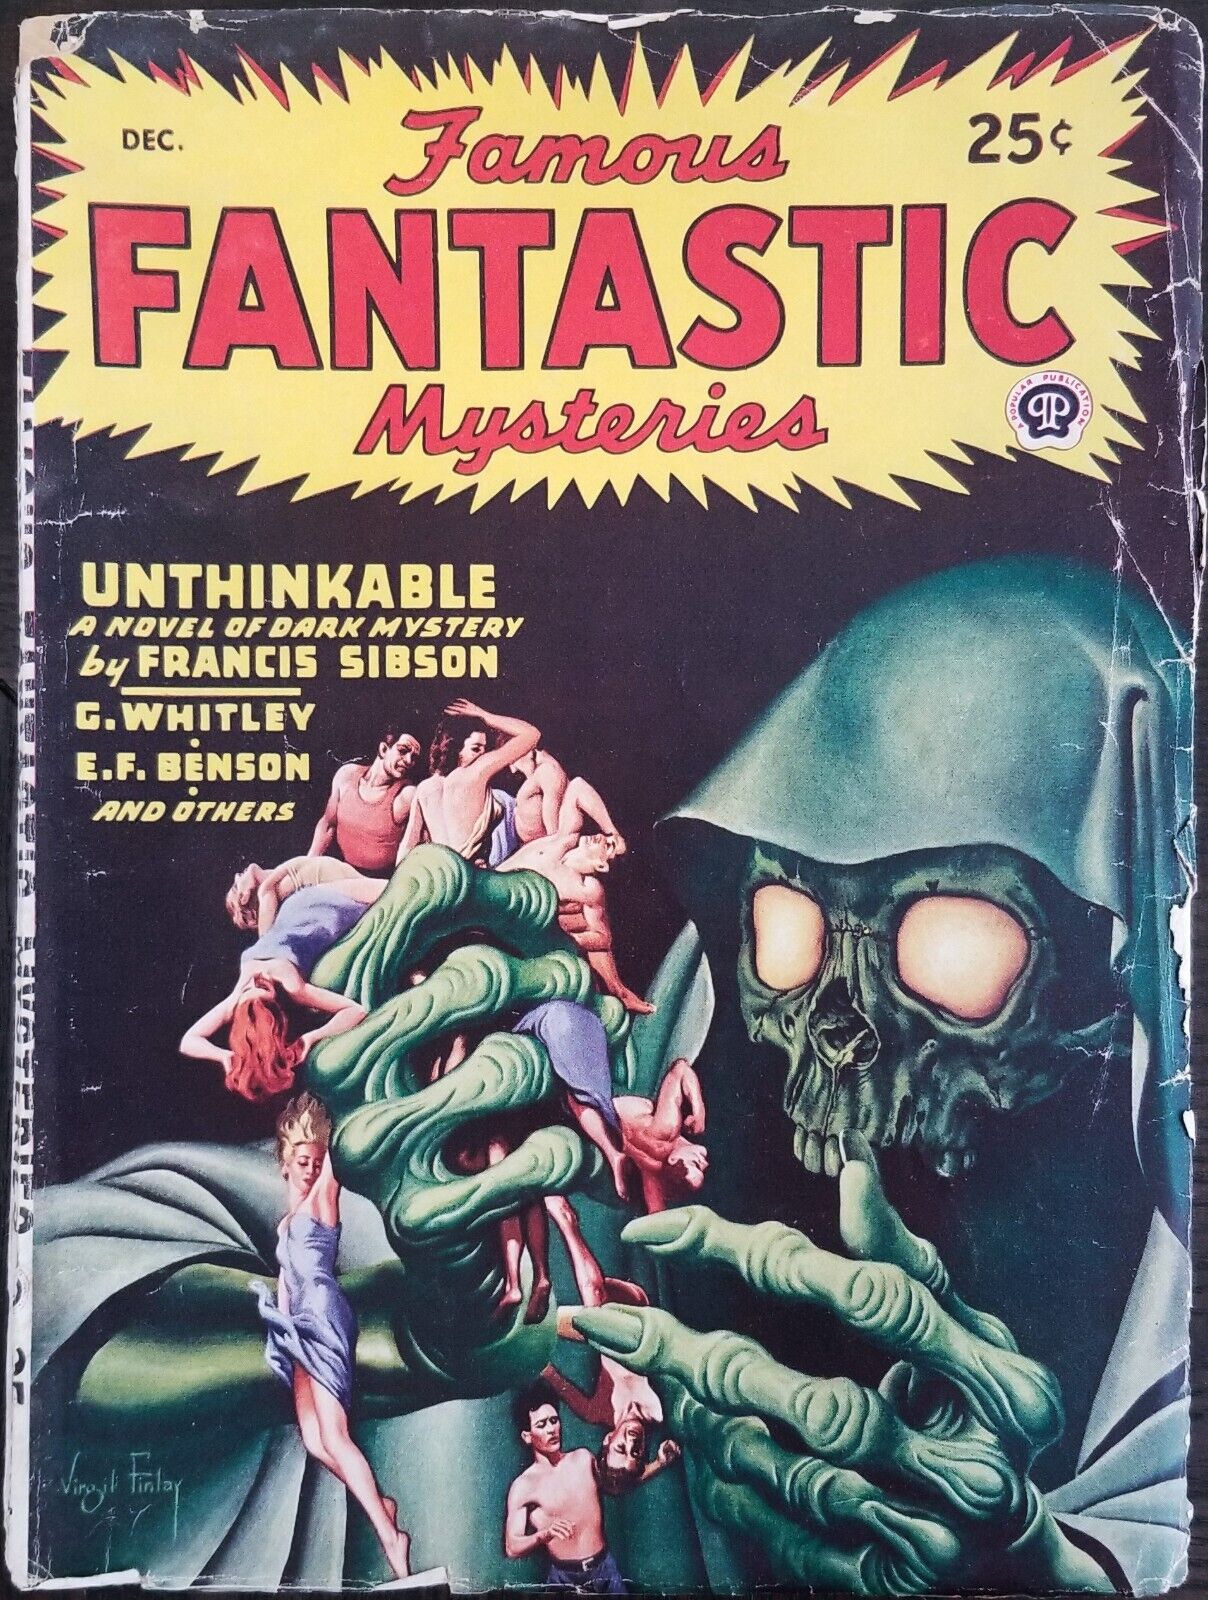 FAMOUS FANTASTIC MYSTERIES - DECMEBER 1946 - VIRGIL FINLEY COVER - BEAUTIFUL